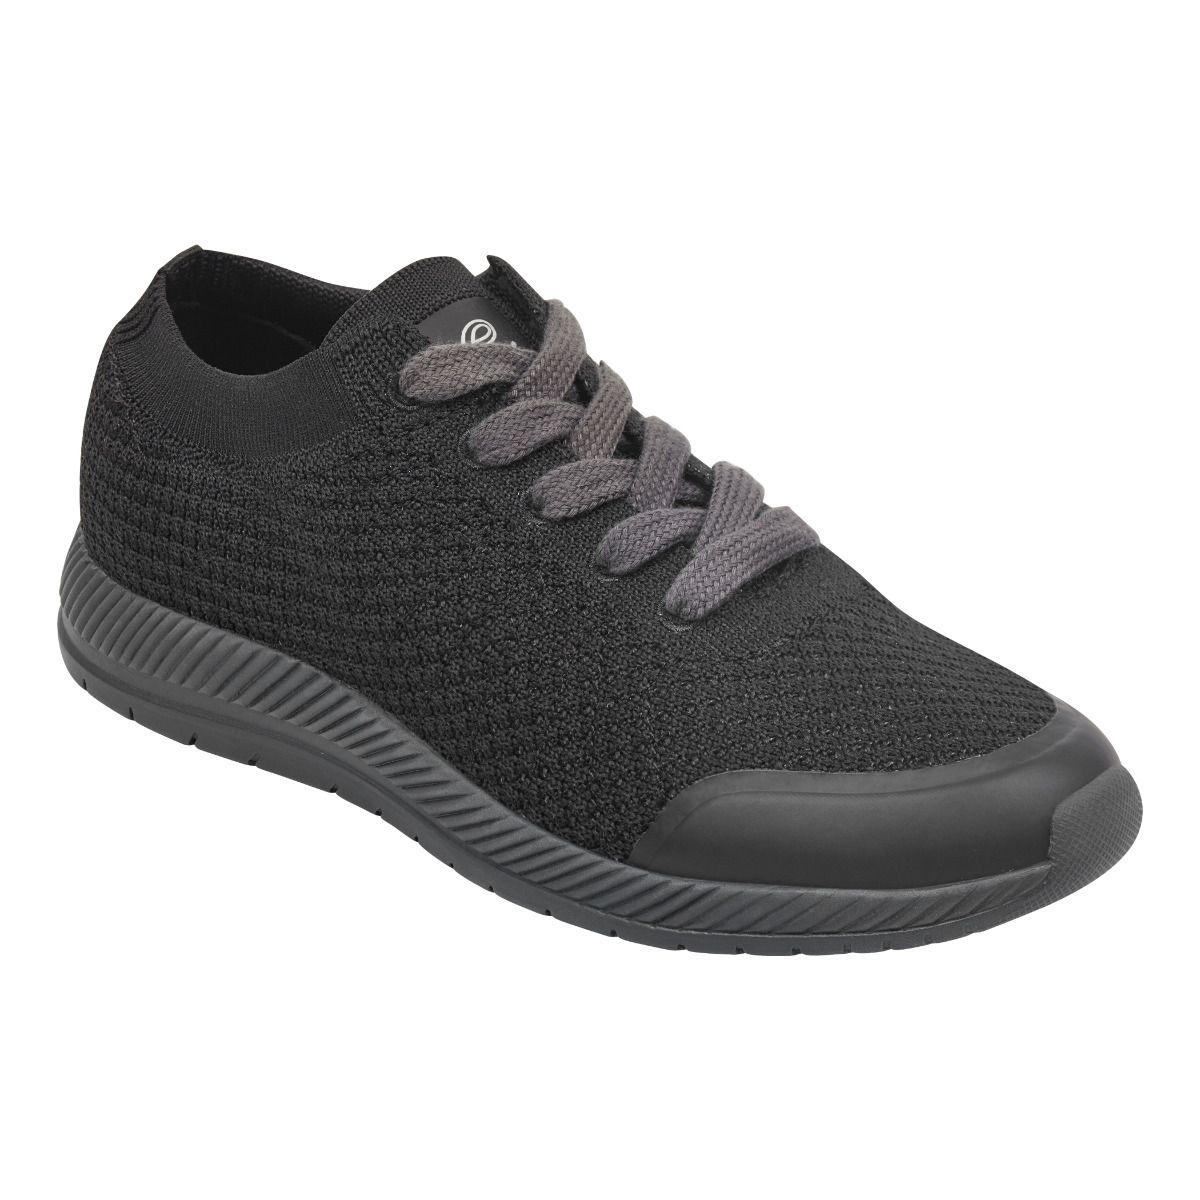 Leather Garabi Walking Shoes - Lyst